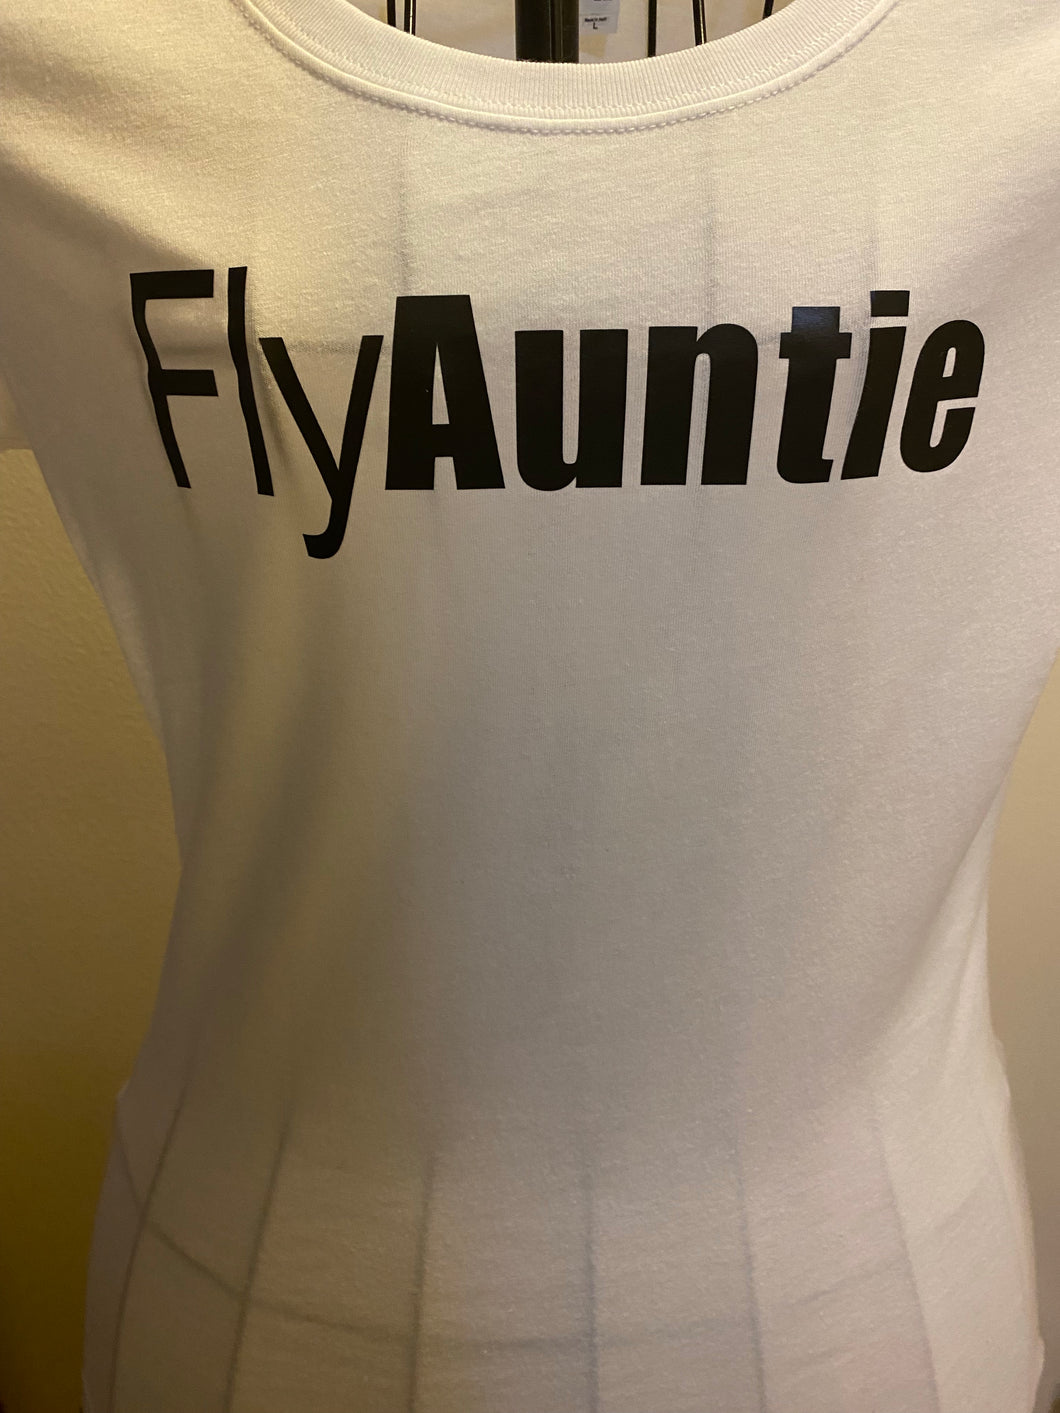 FlyAuntie